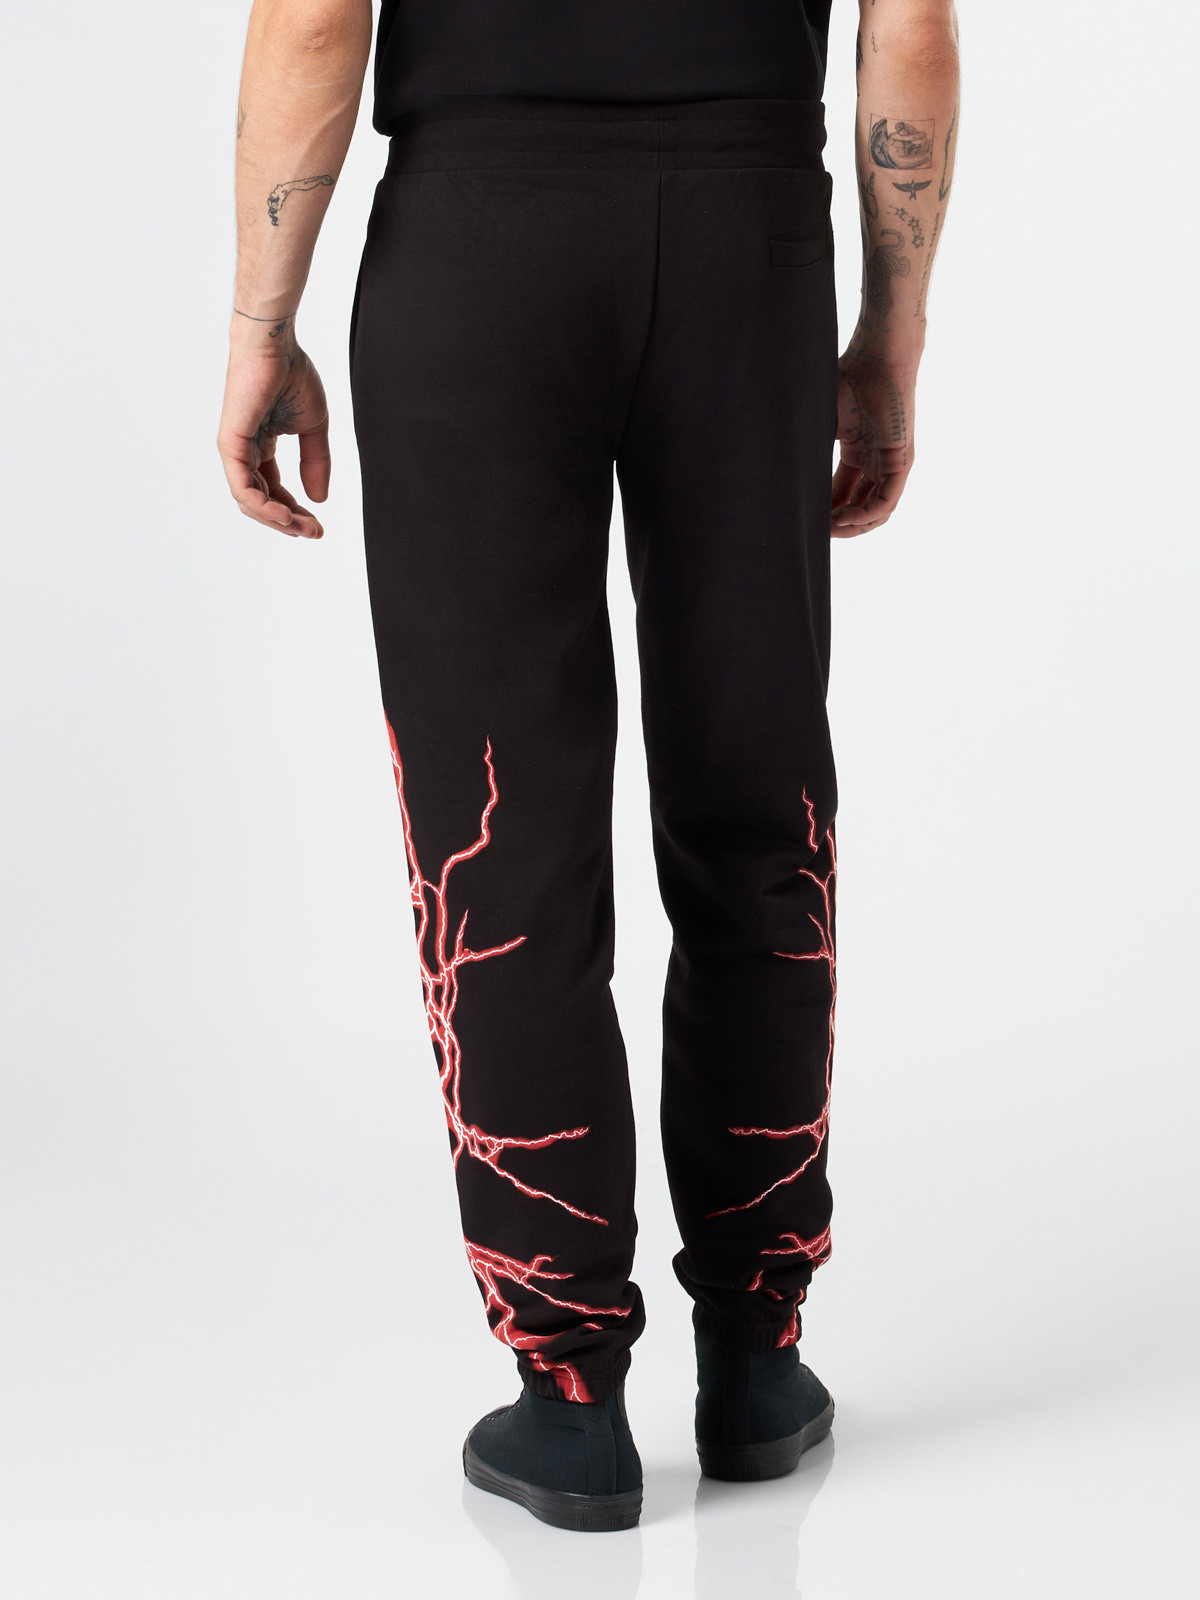 Phobia - Pantaloni in cotone con stampa fulmine, Nero, large image number 2